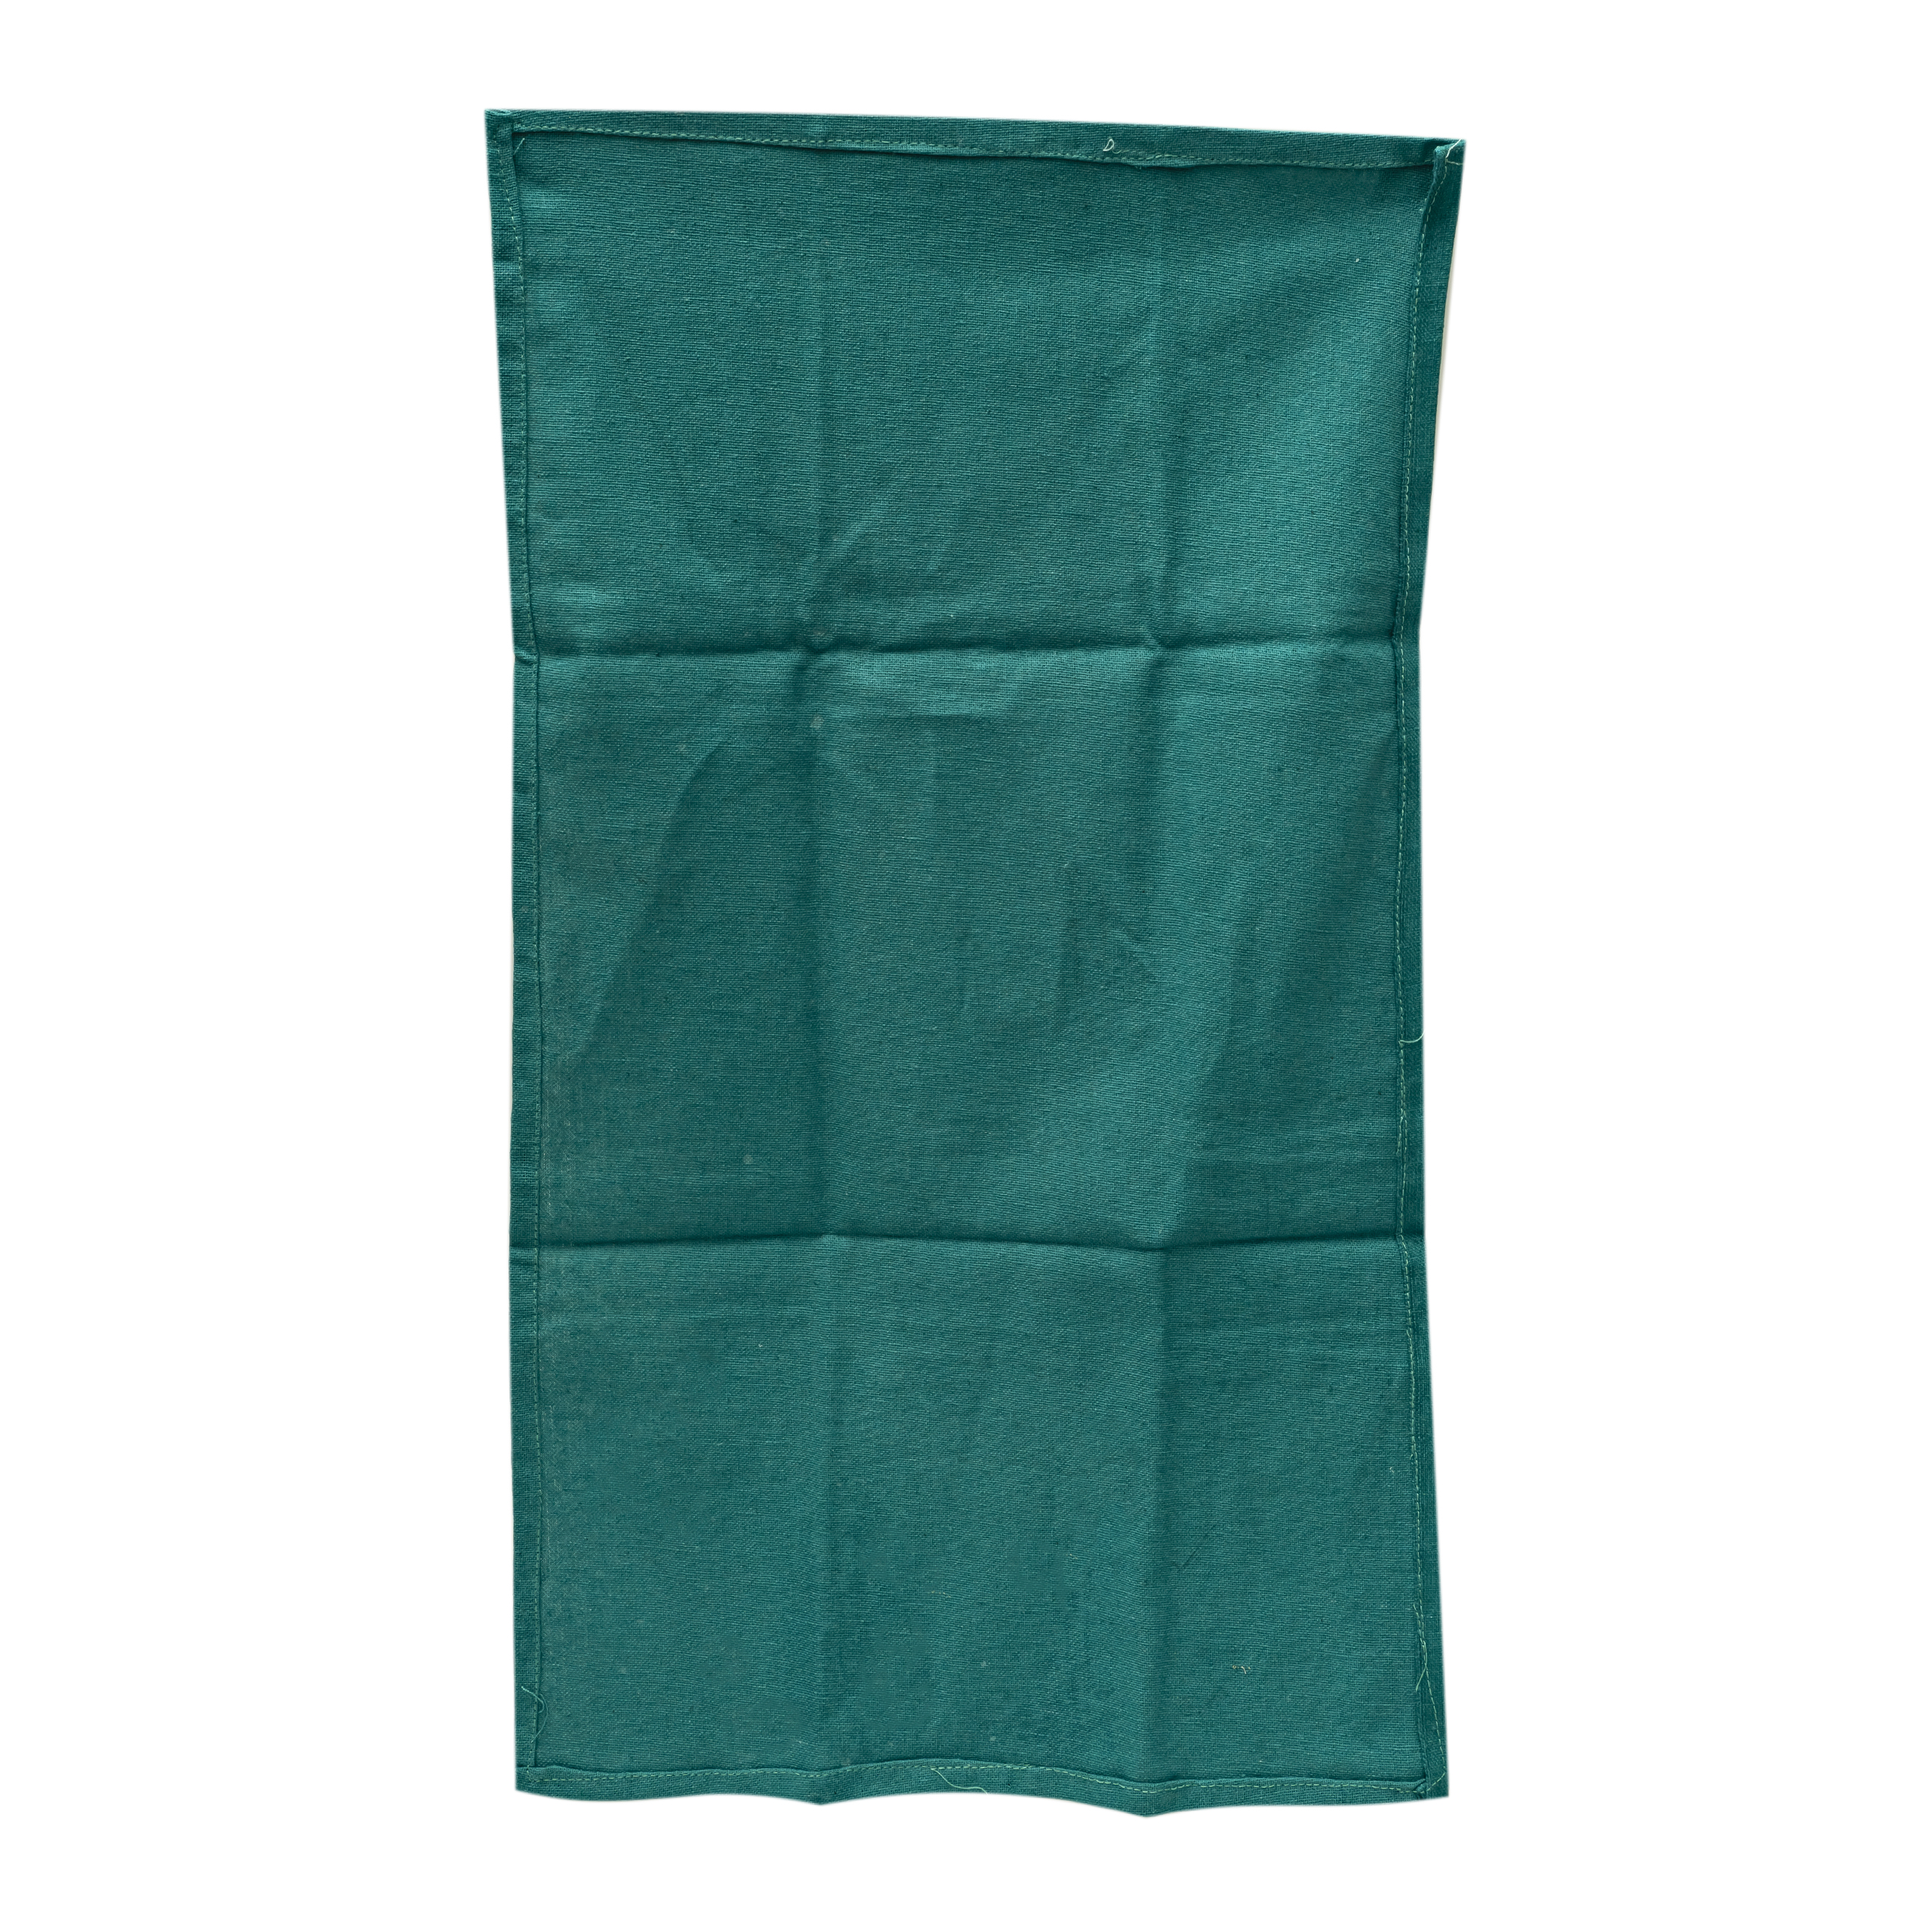 Green Cloth 14cmx28cm